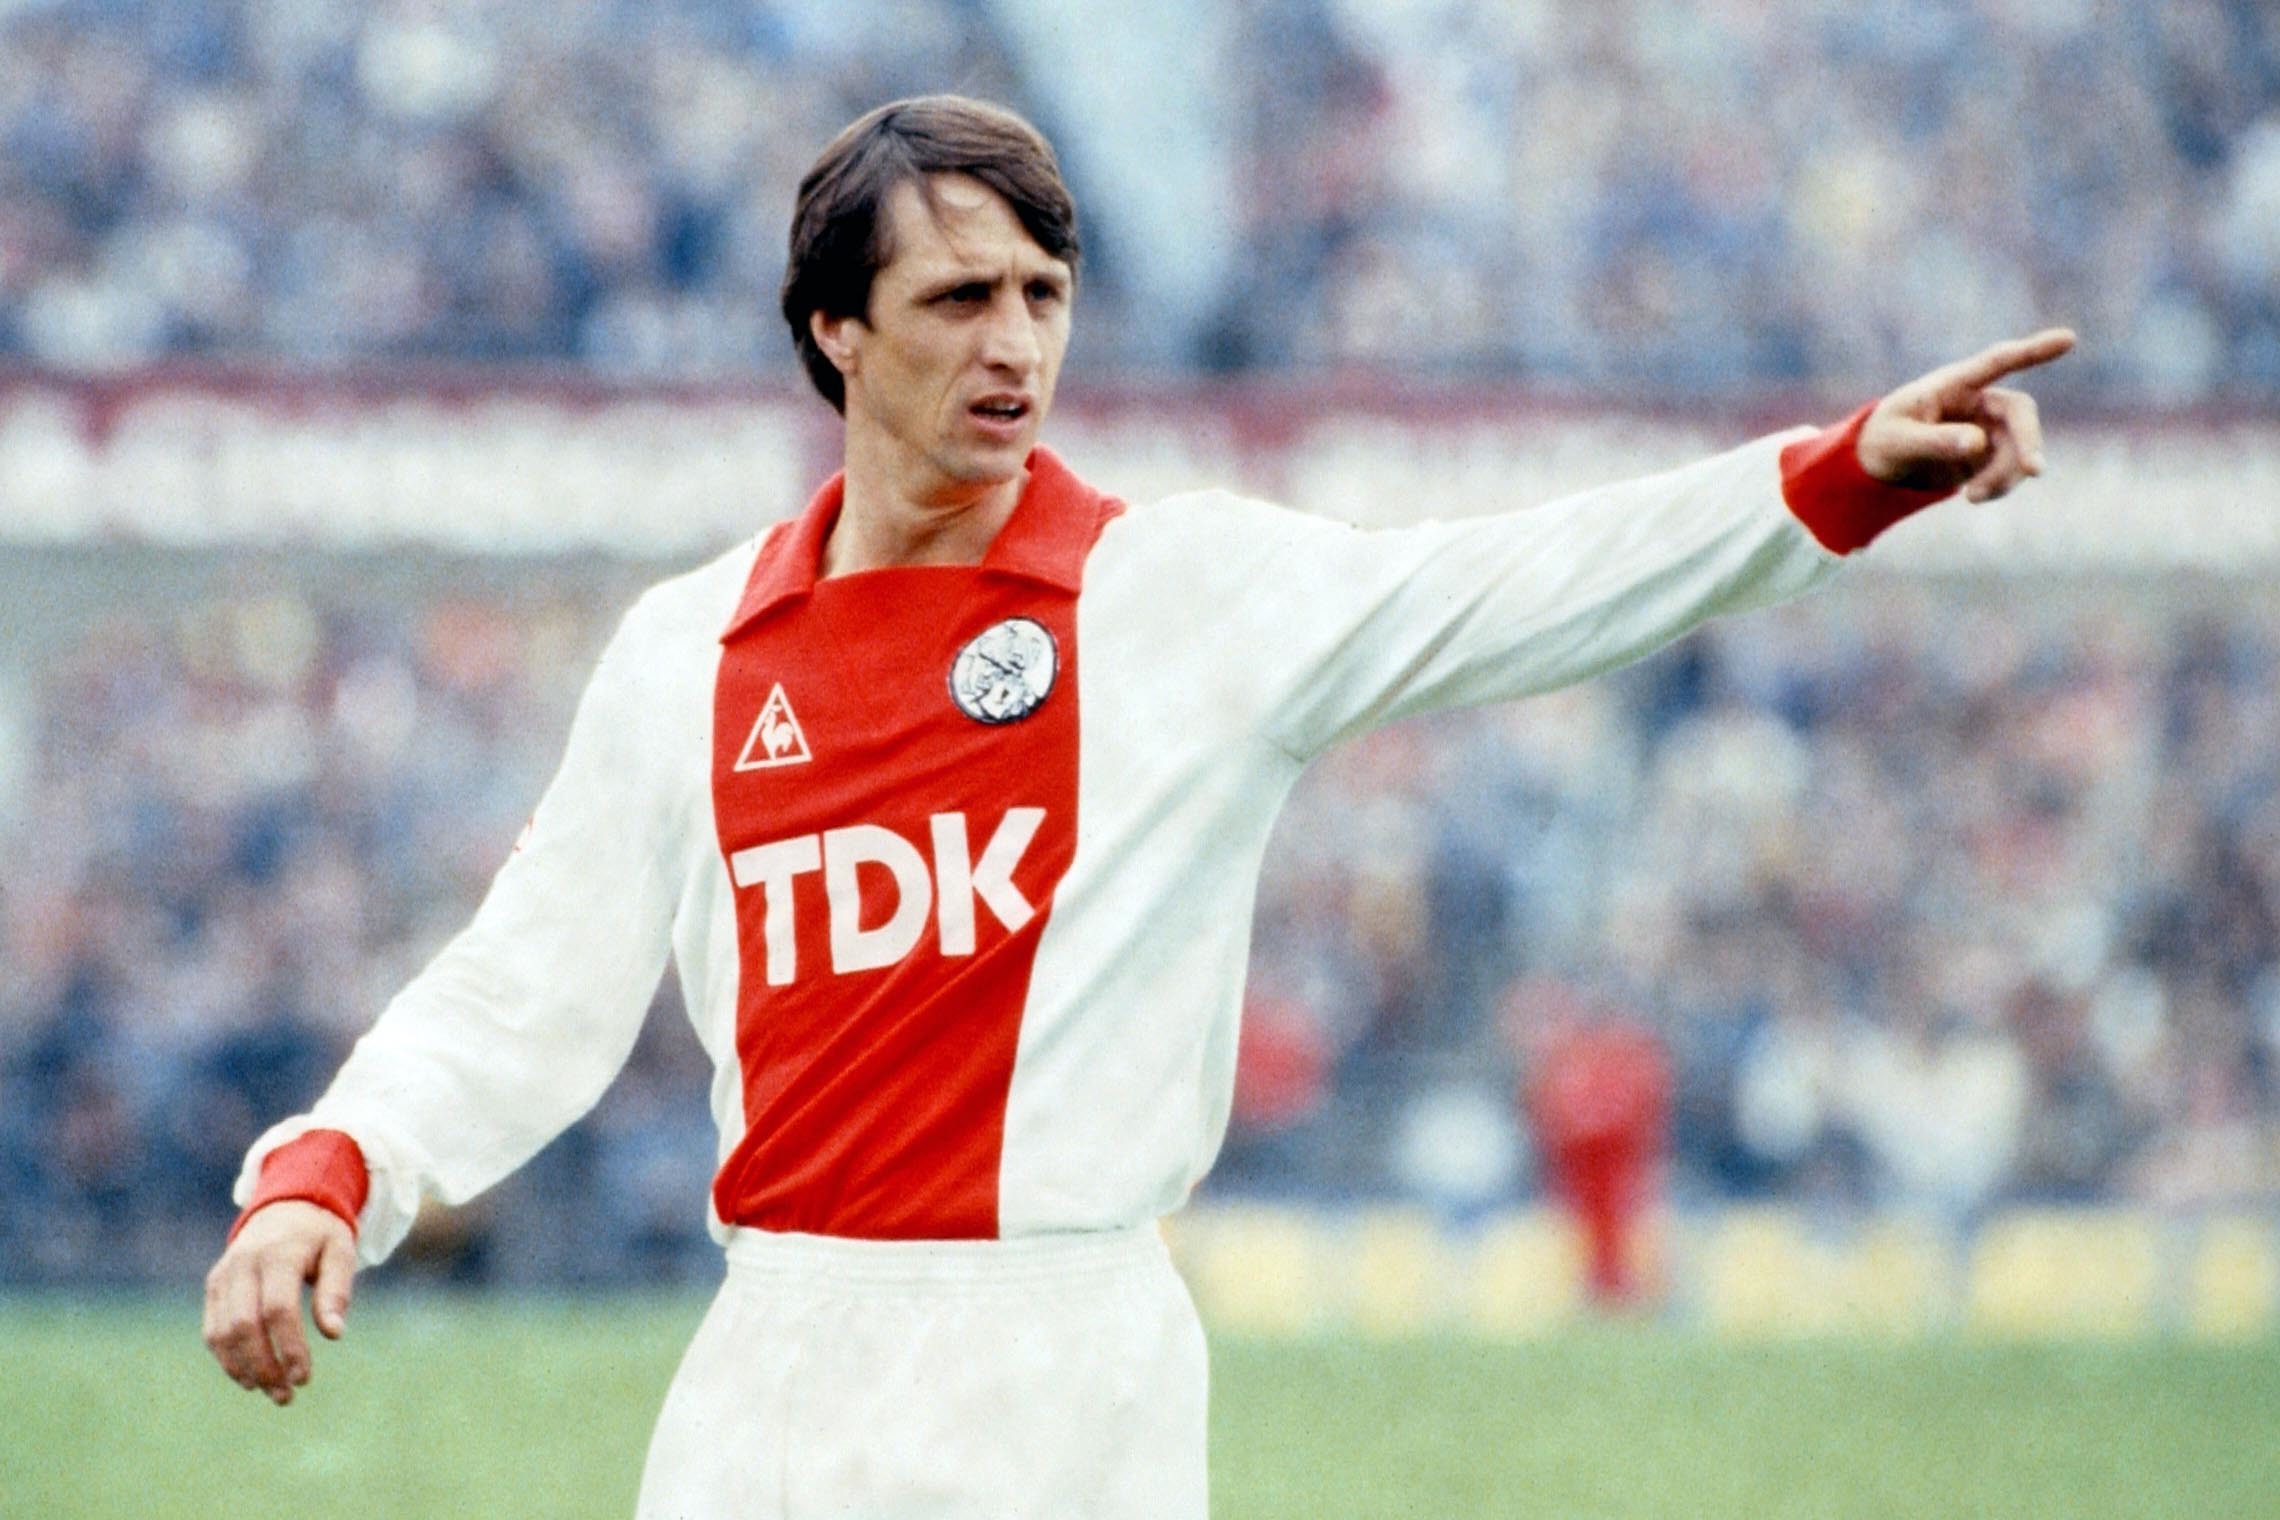 Six ans sans Johan Cruyff, mais son héritage est éternel